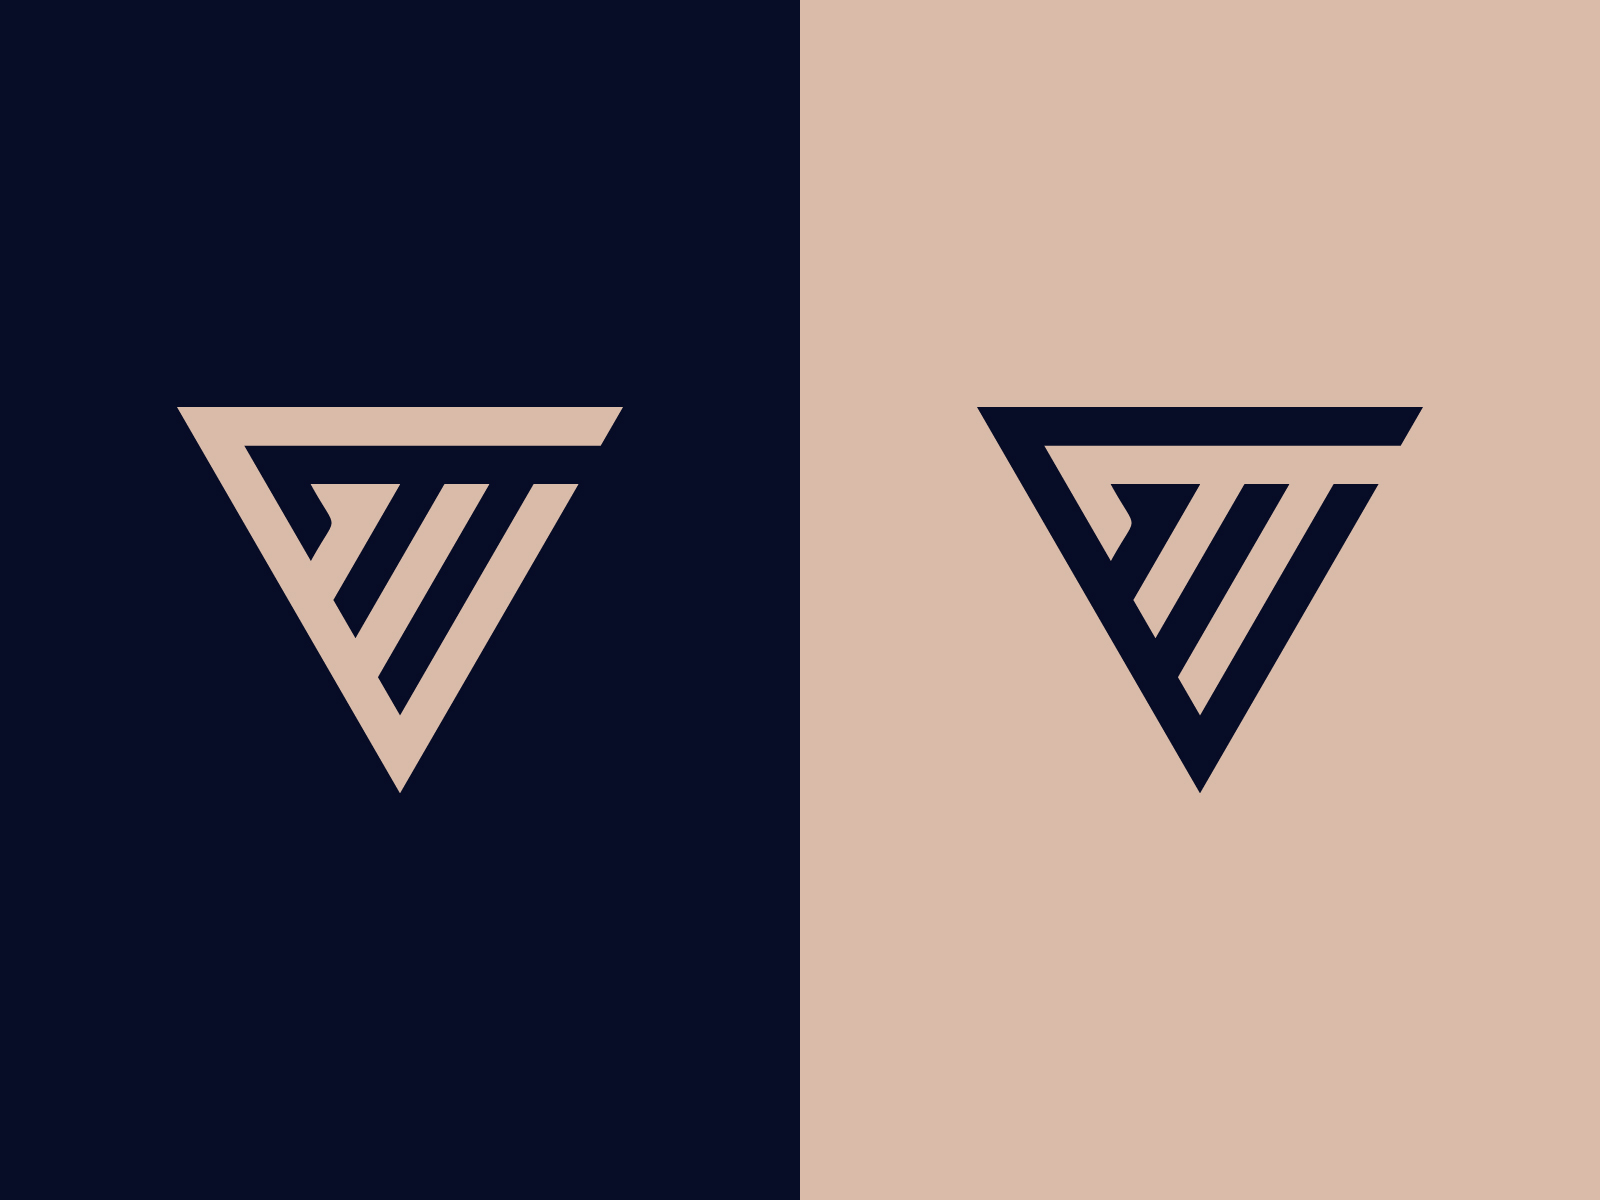 Wg logo monogram design template Royalty Free Vector Image